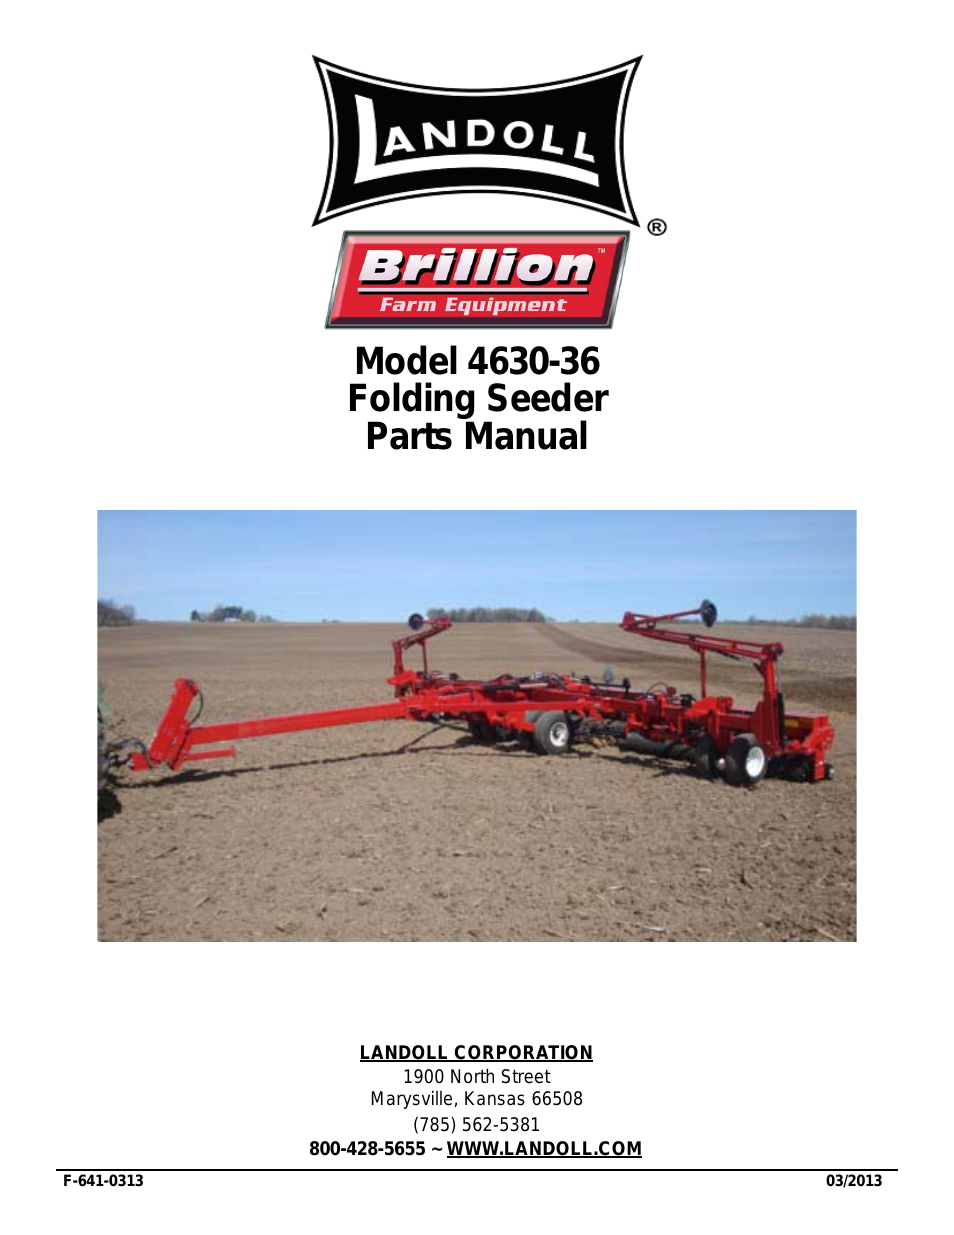 4630-36 Folding Seeder Parts Manual v.F-641-0313 03/2013